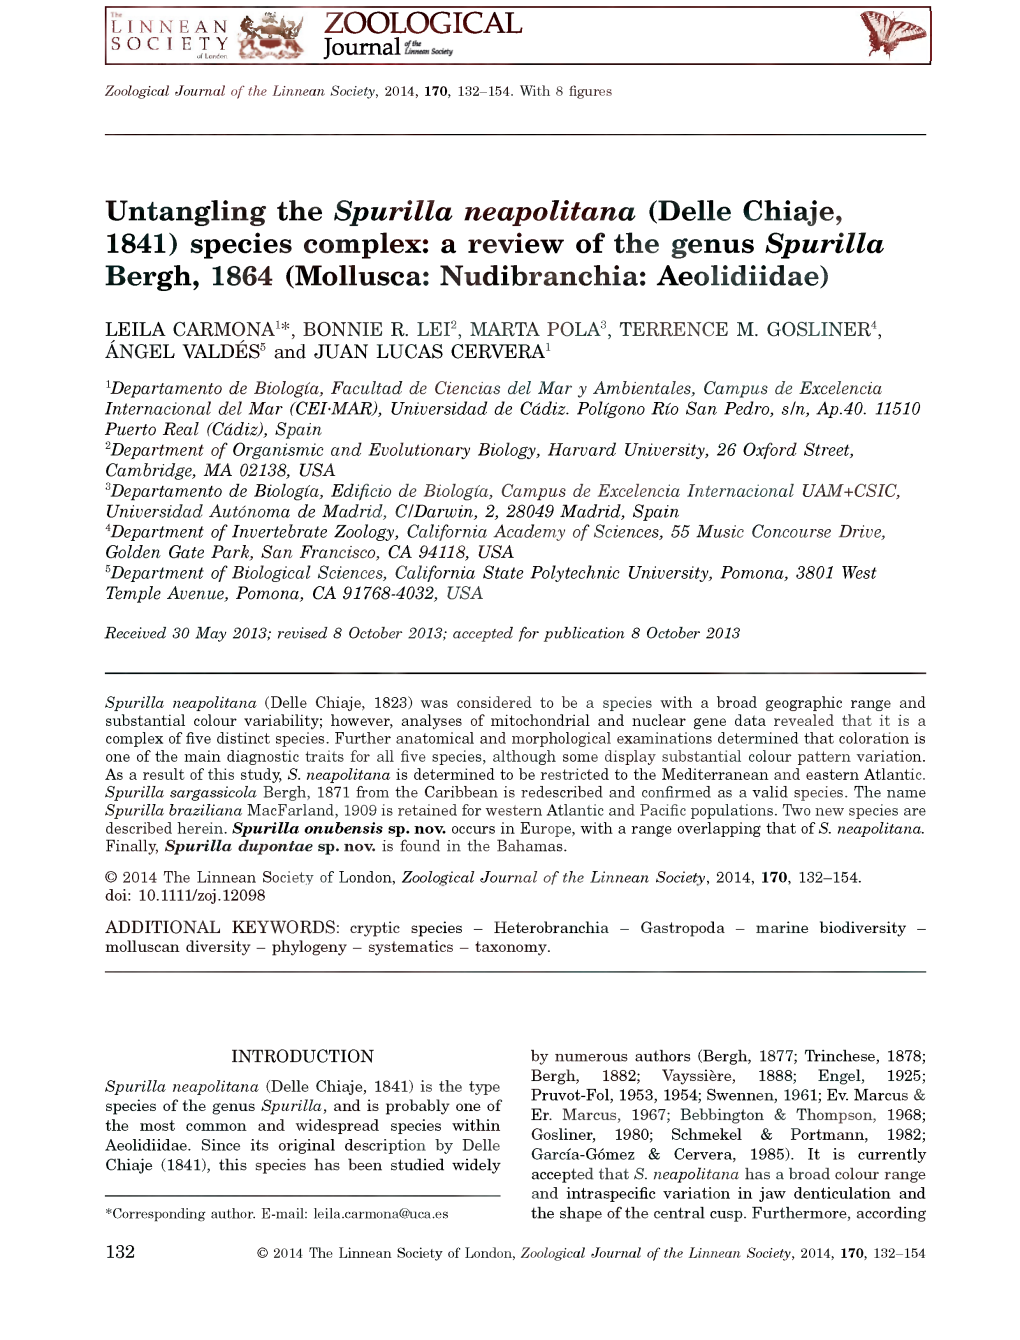 Untangling the Spurilla Neapolitana (Delle Chiaje, 1841) Species Complex: a Review of the Genus Spurilla Bergh, 1864 (Mollusca: Nudibranchia: Aeolidiidae)